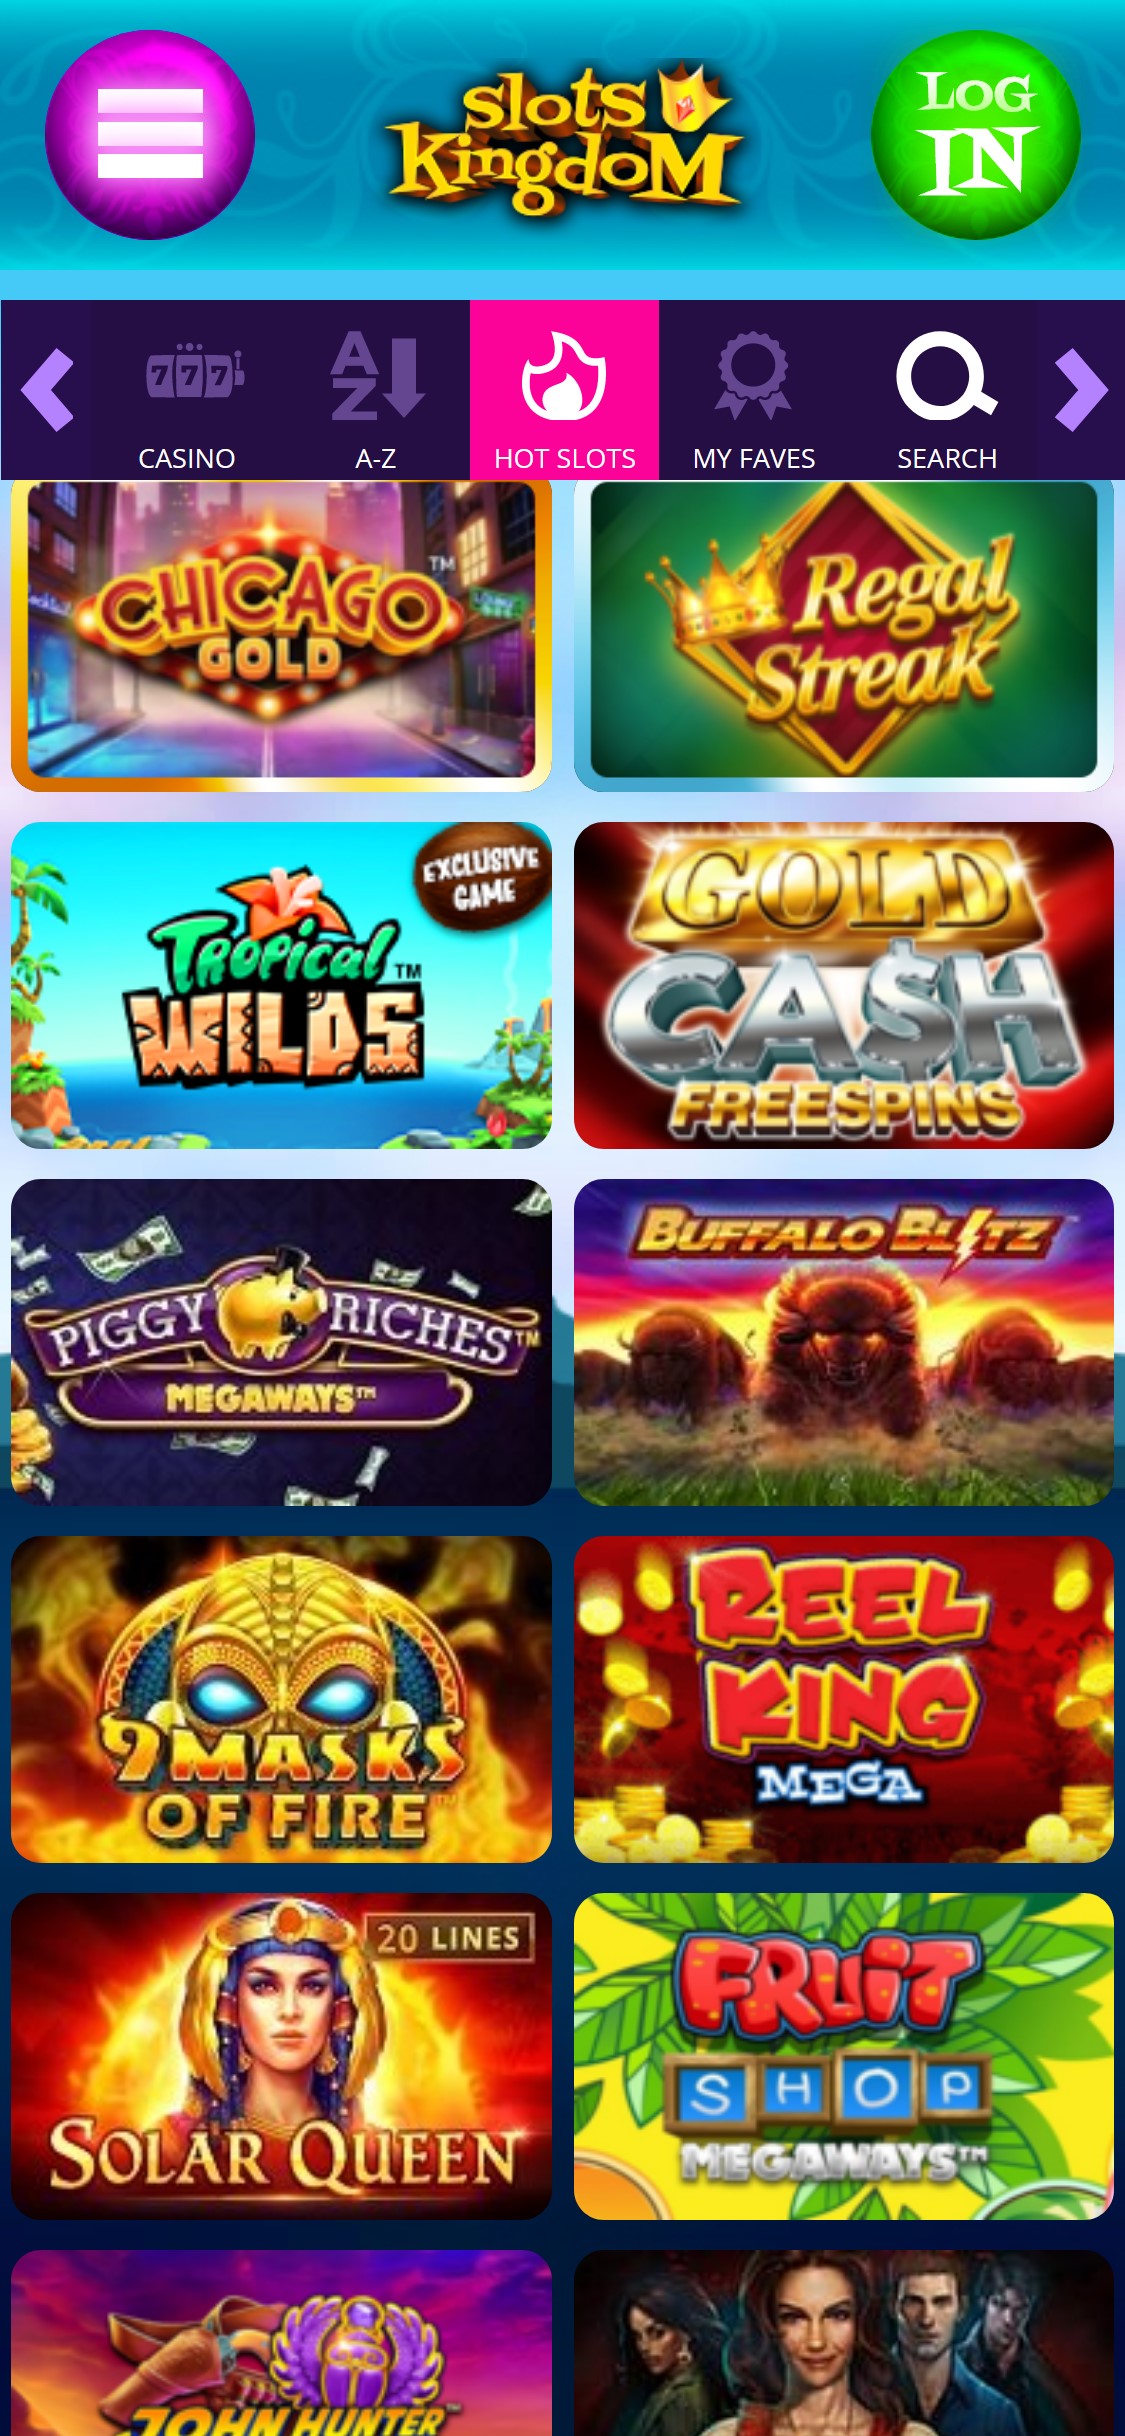 Slots Kingdom Casino Mobile Games Review